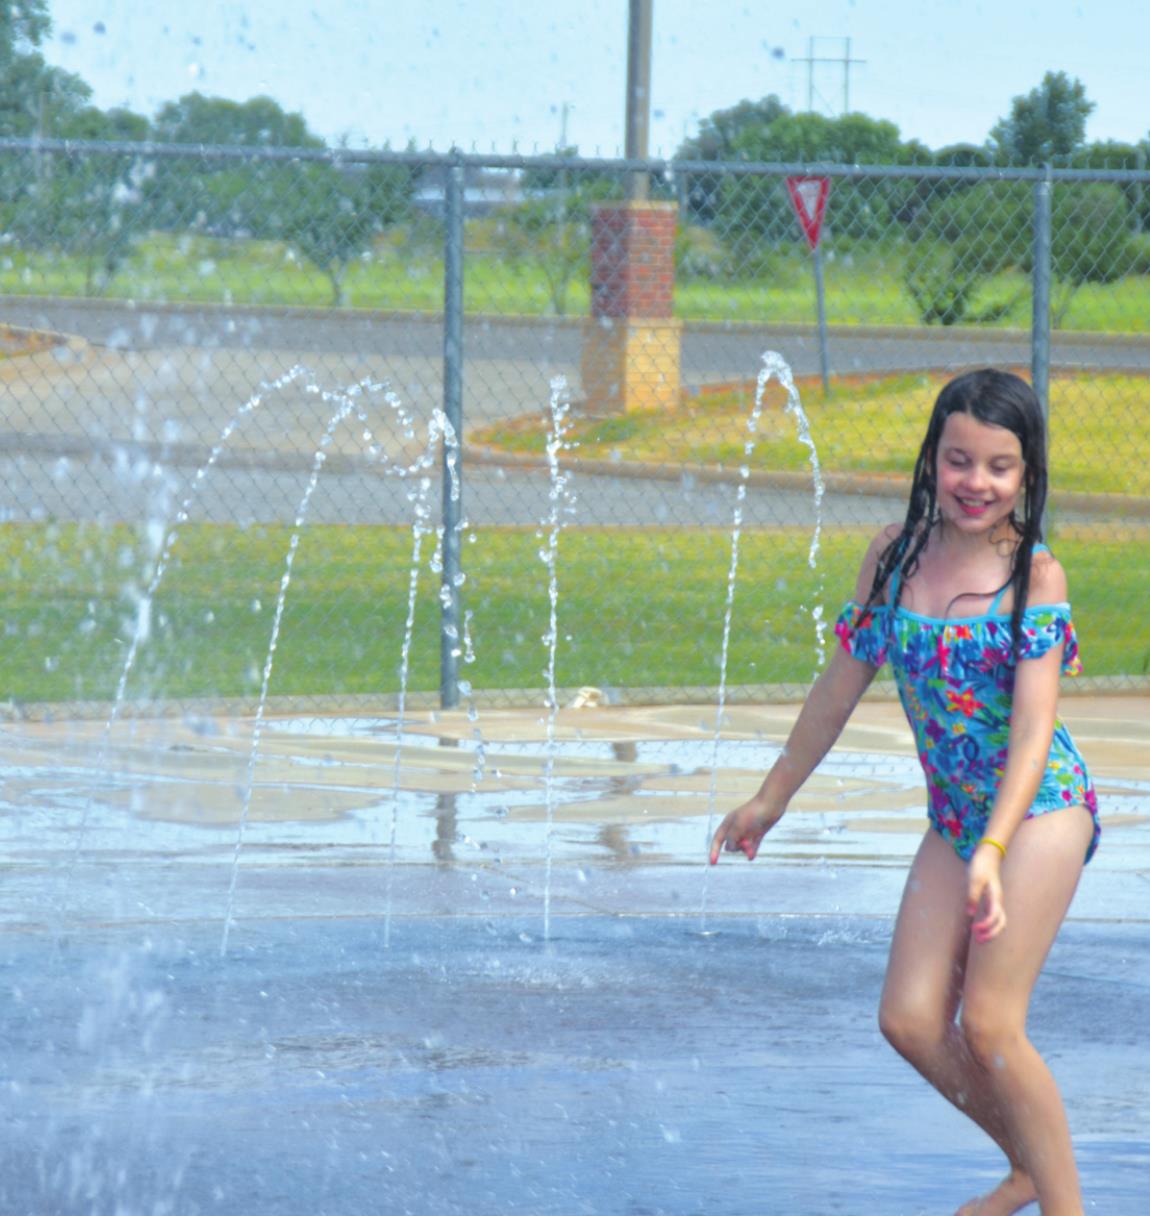 Prezley Wright is splashing into summer as she plays at the splash pad near Rader Park. Josh Jennings/WDN